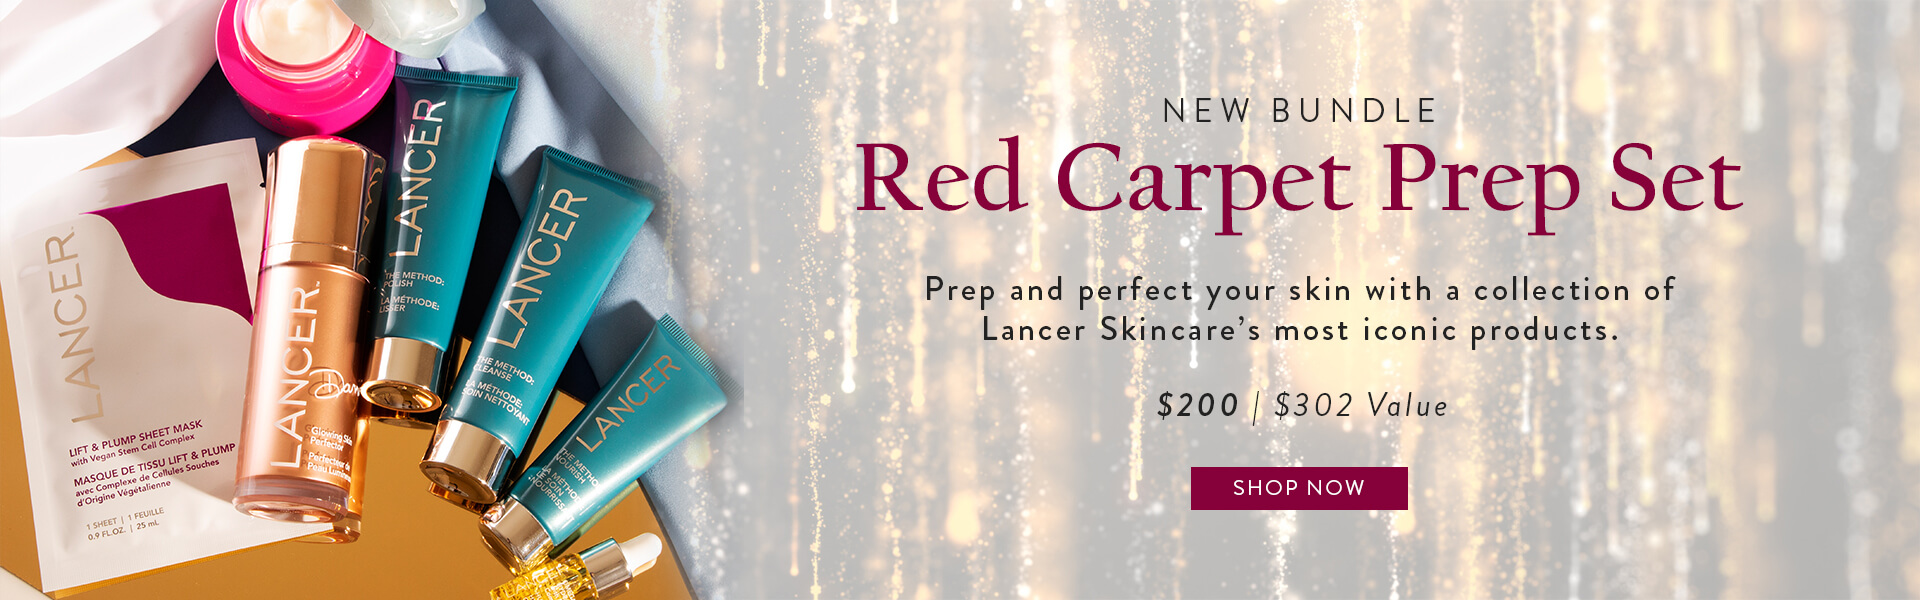 Red Carpet Prep Set - Shop Now!